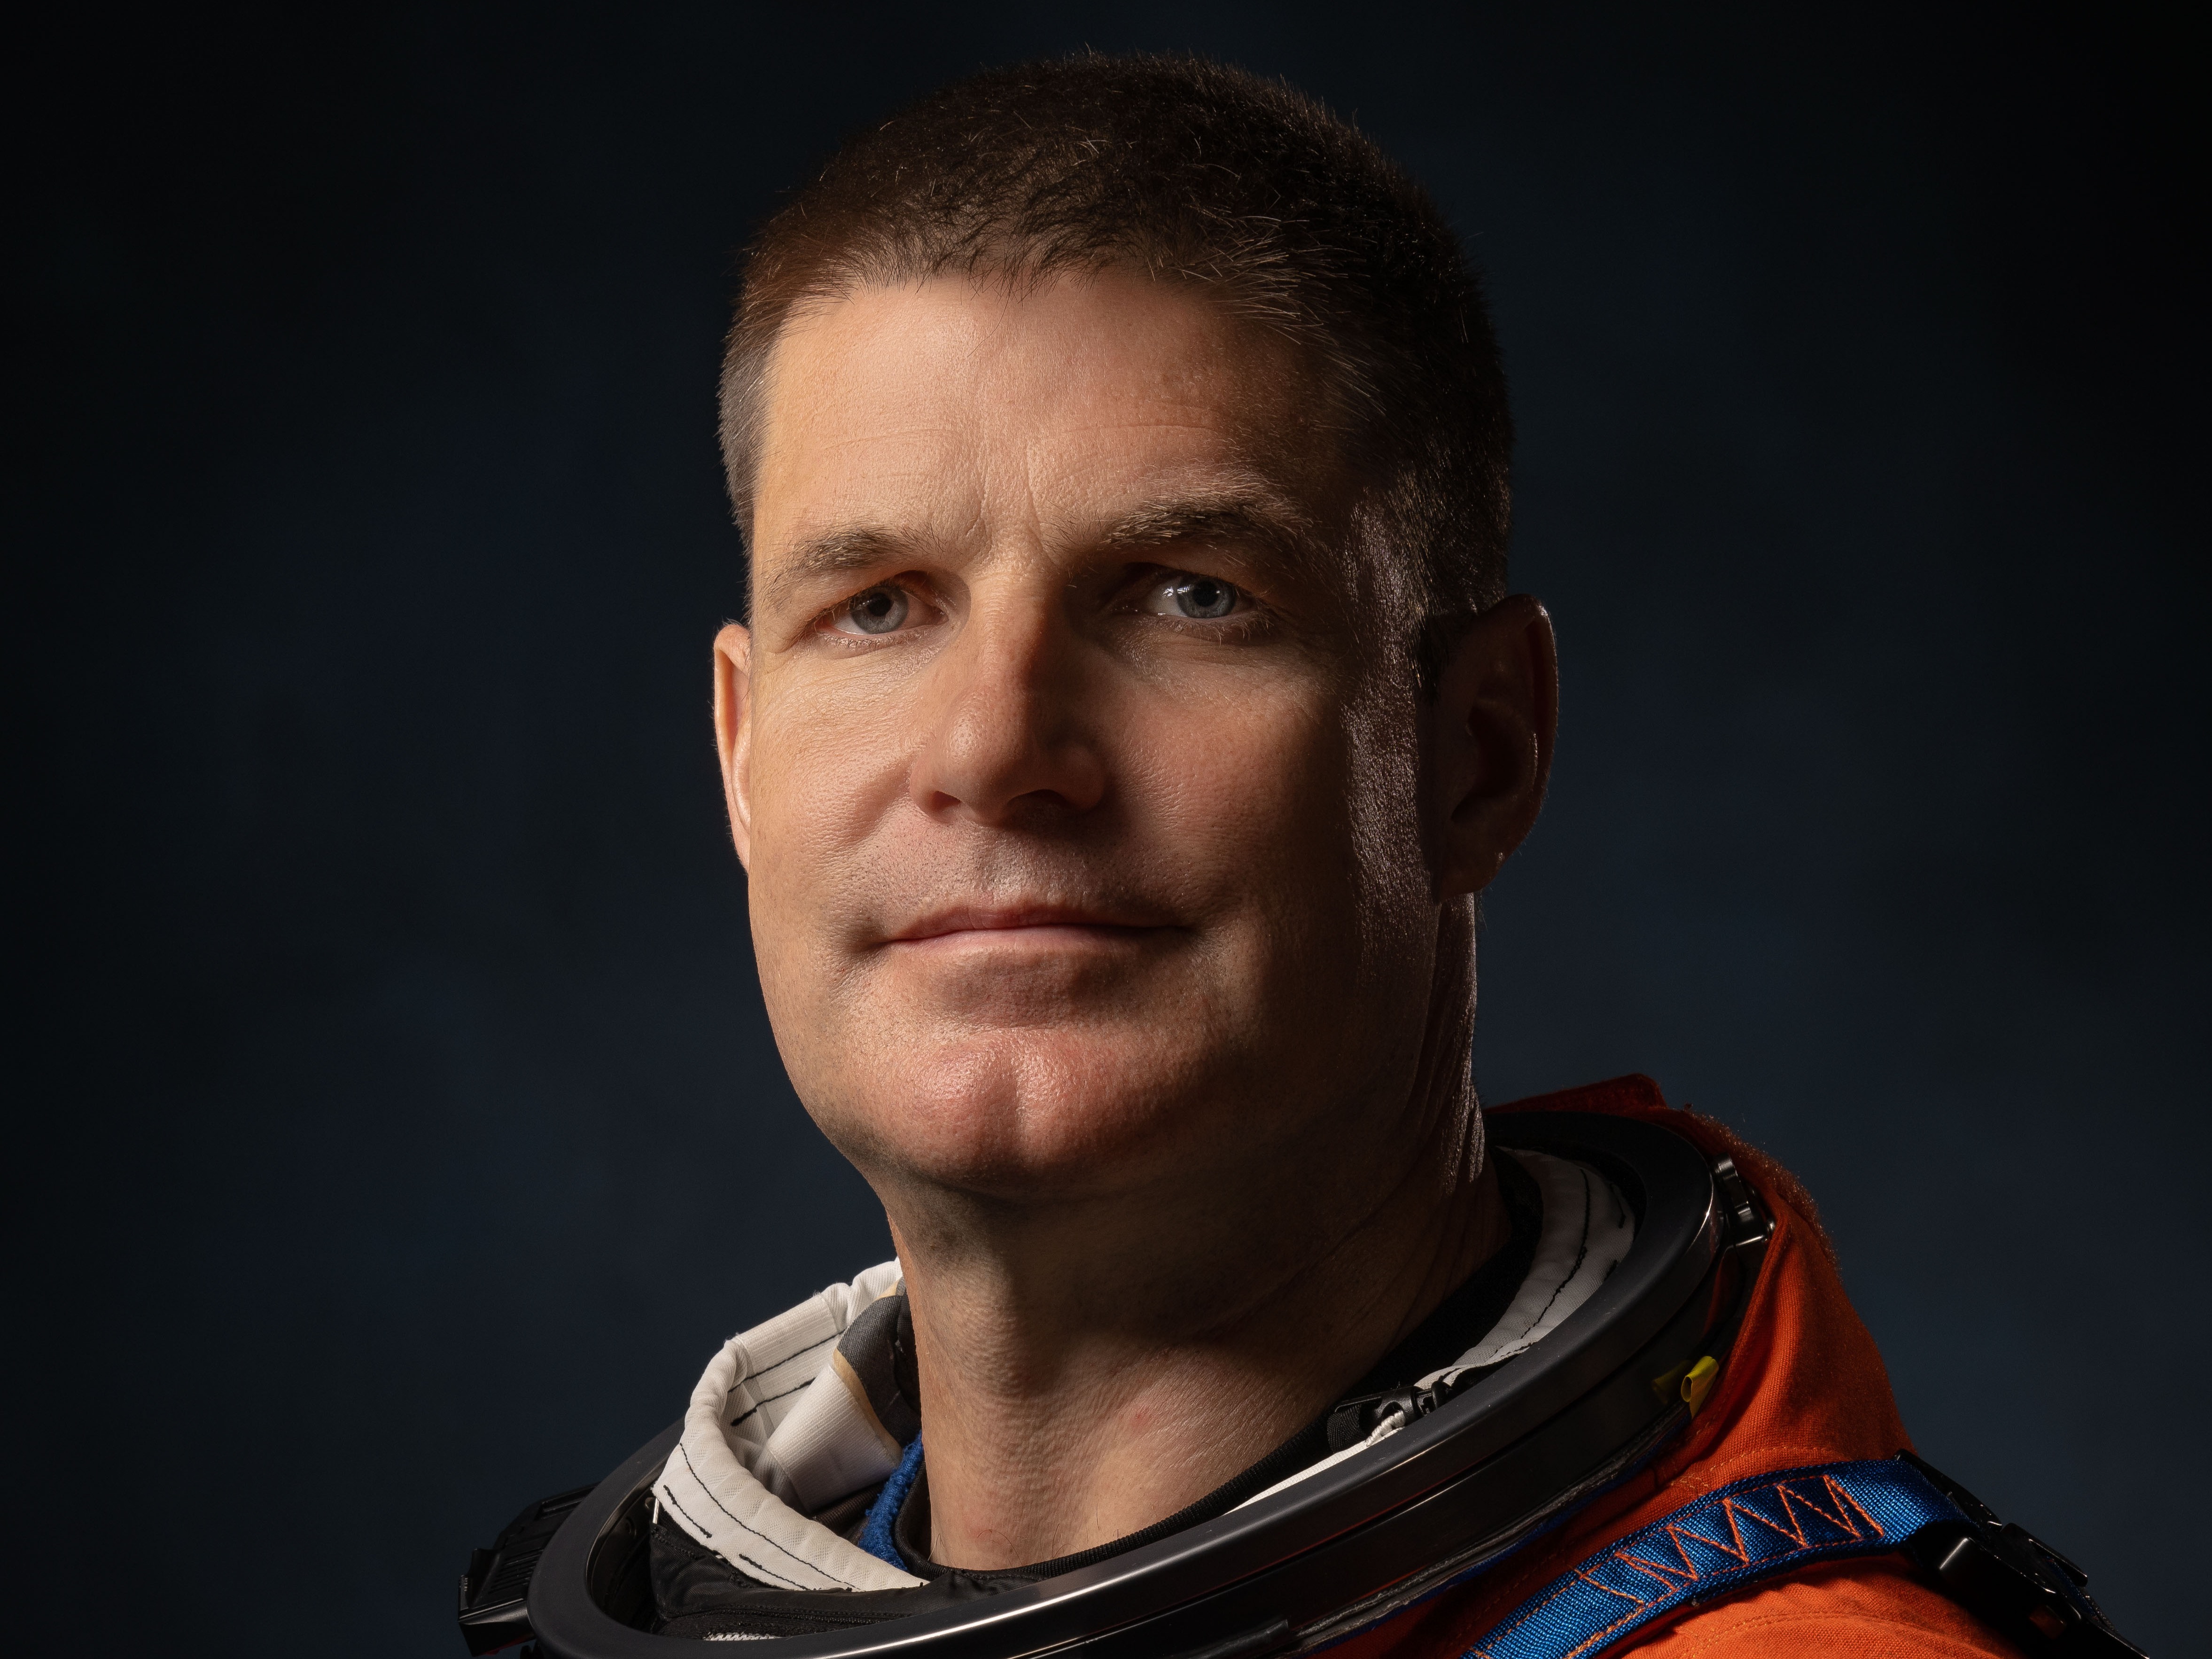 https://images.ctfassets.net/gk8hs8lmghf8/21tOljHU9VJvpDVzLeVx2y/d35ef4e6d6e77652191892f651a157c5/Portrait-of-CSA-astronaut-Jeremy-Hansen.jpg